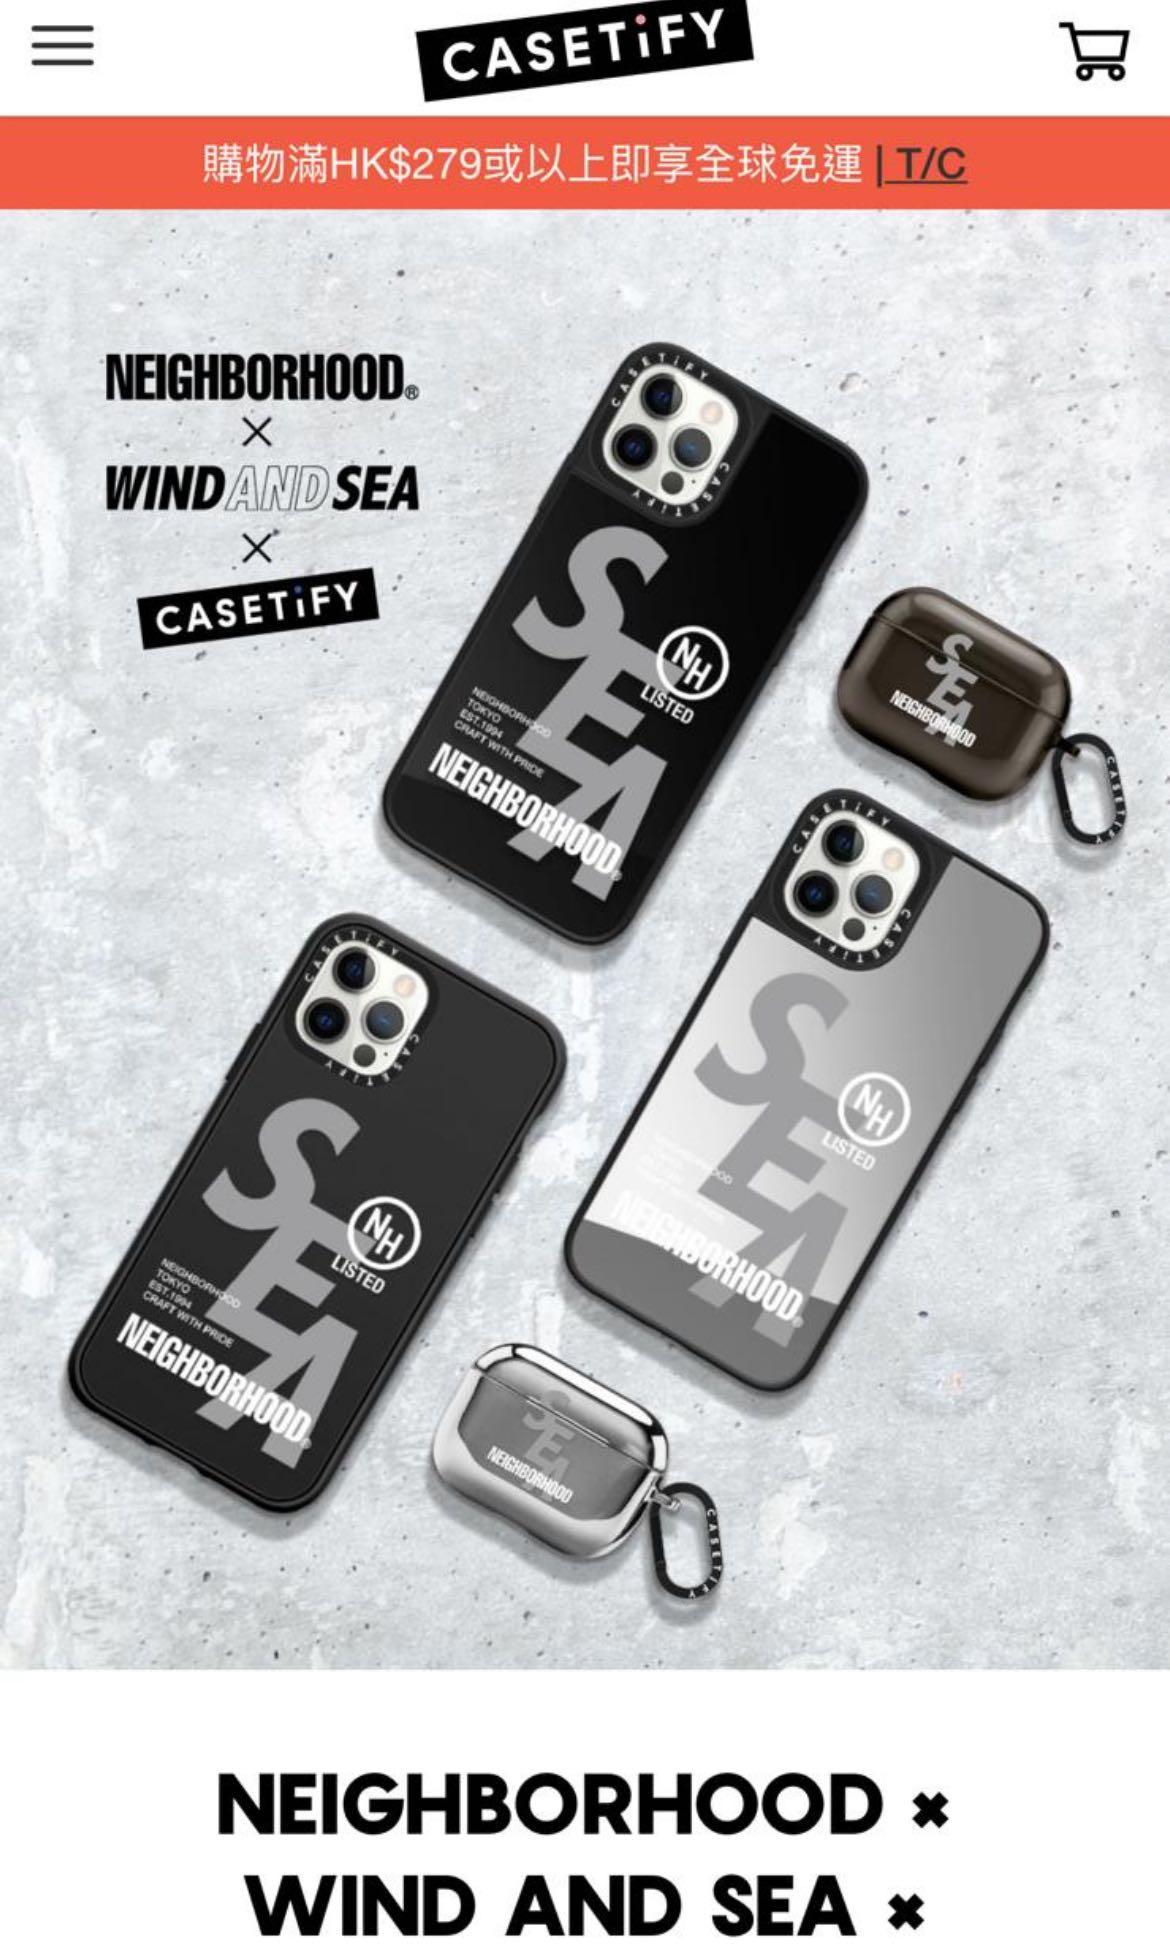 WIND AND SEA x CASETiFY - スマホアクセサリー